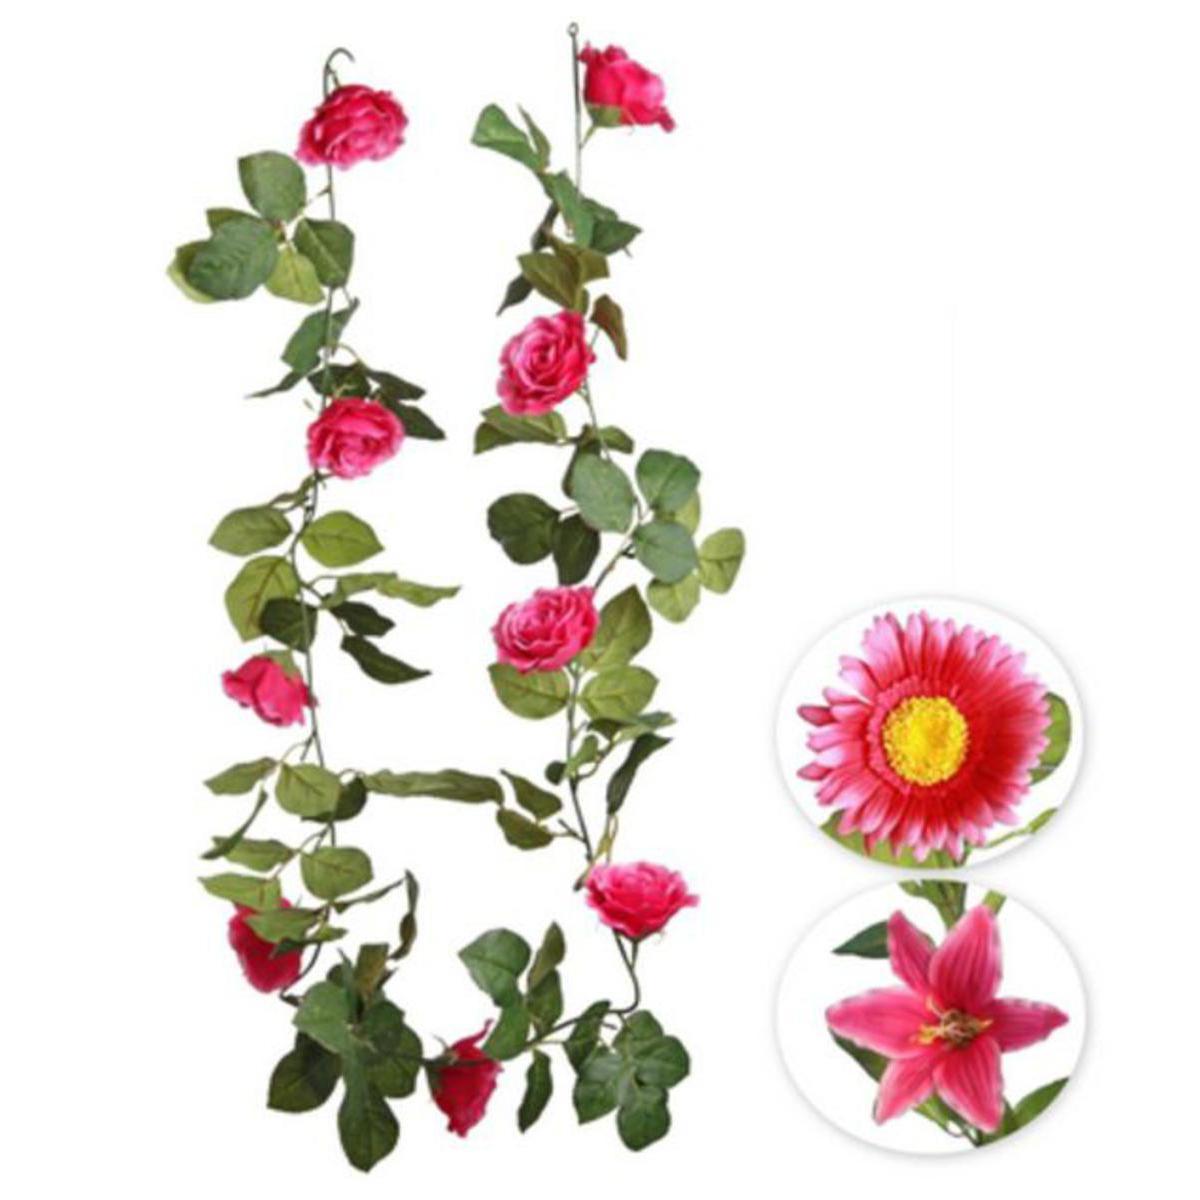 Guirlande de Lys Roses et Gerbera - Plastique et polyester - H 160 cm - Rose